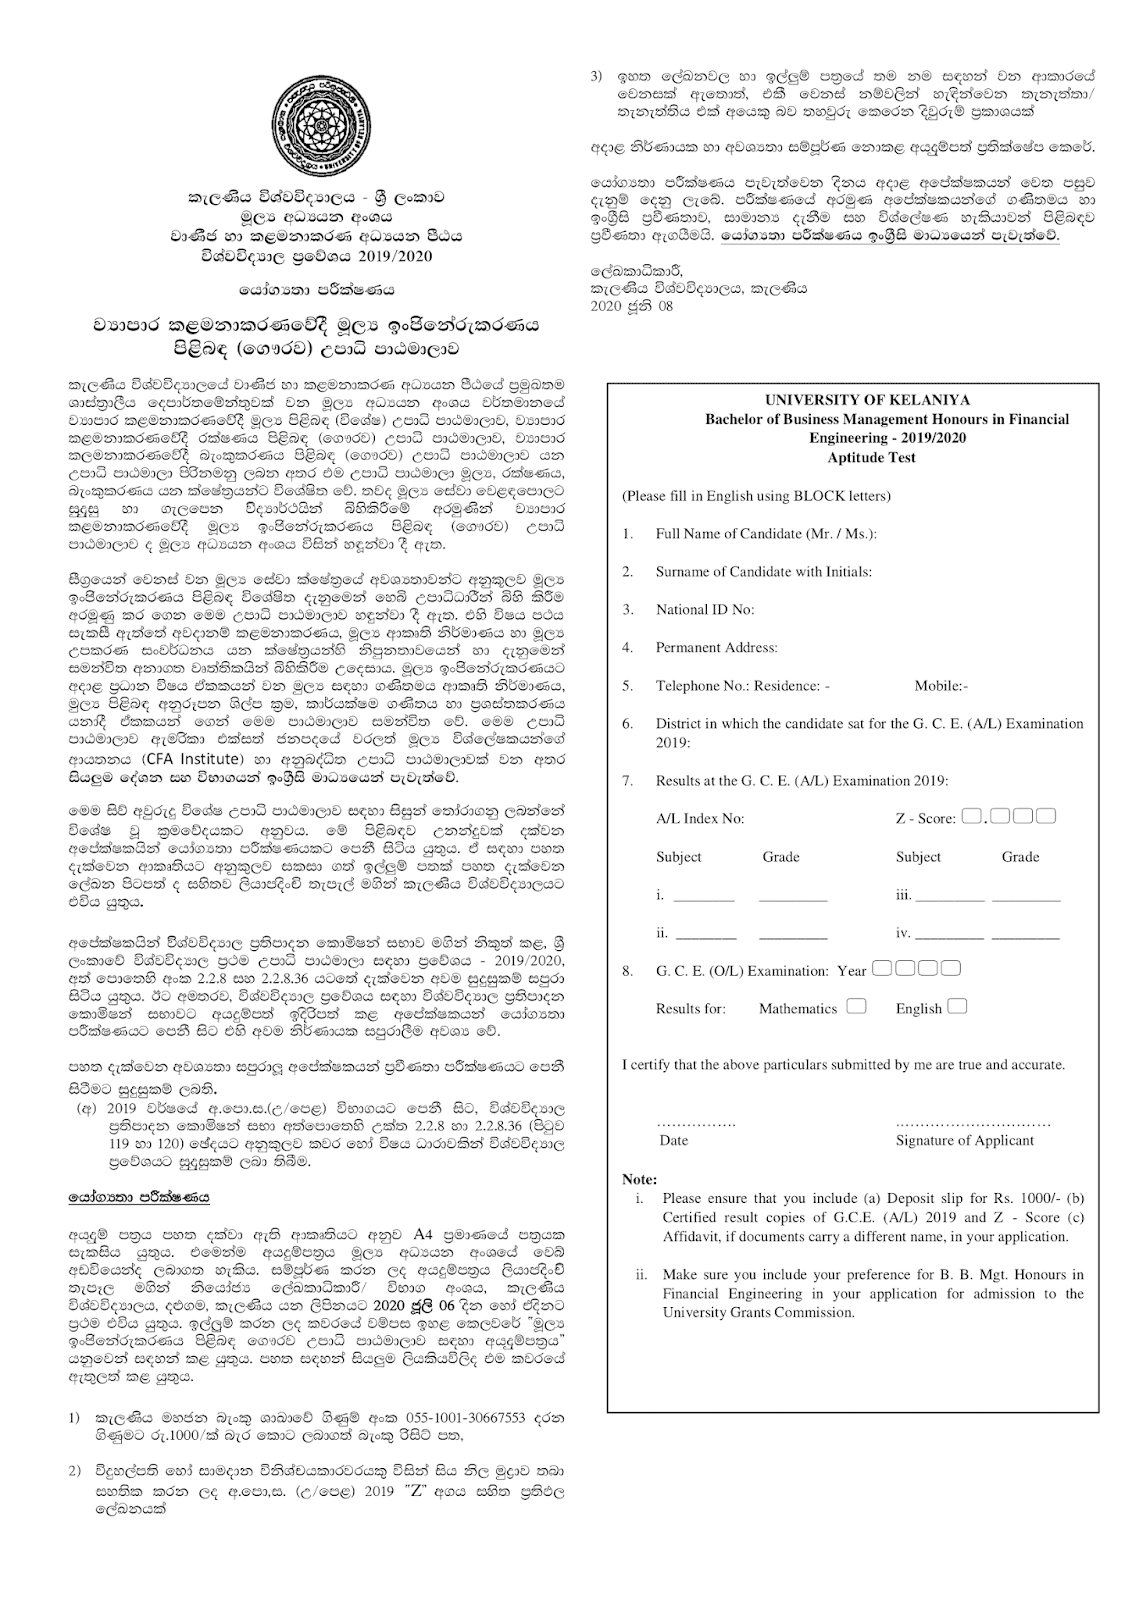 university-of-kelaniya-aptitude-test-2023-uplankajobs-government-job-vacancies-in-sri-lanka